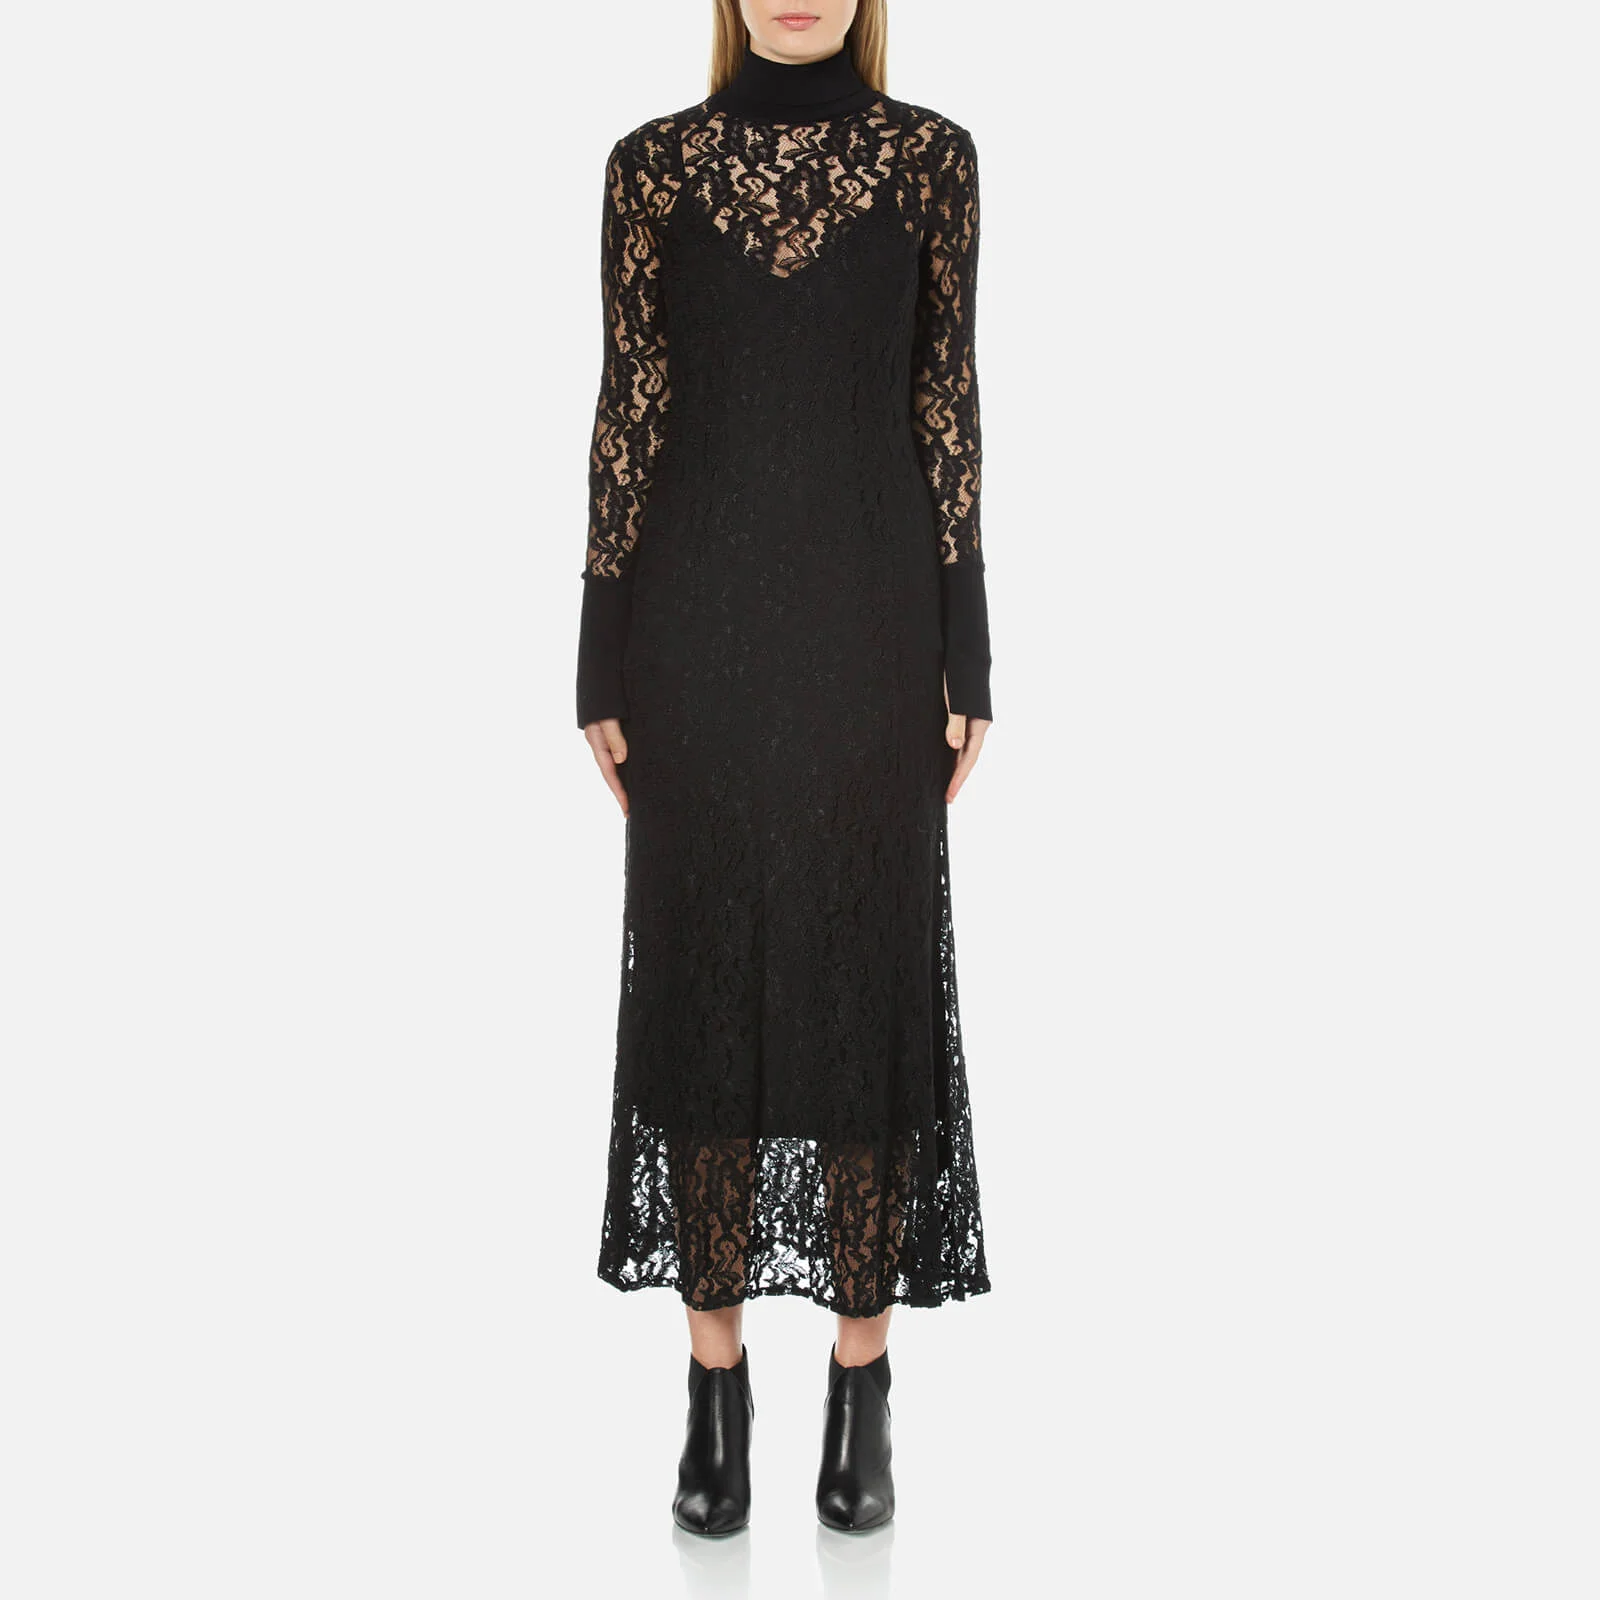 By Malene Birger Women's Palomos Dress - Black Image 1